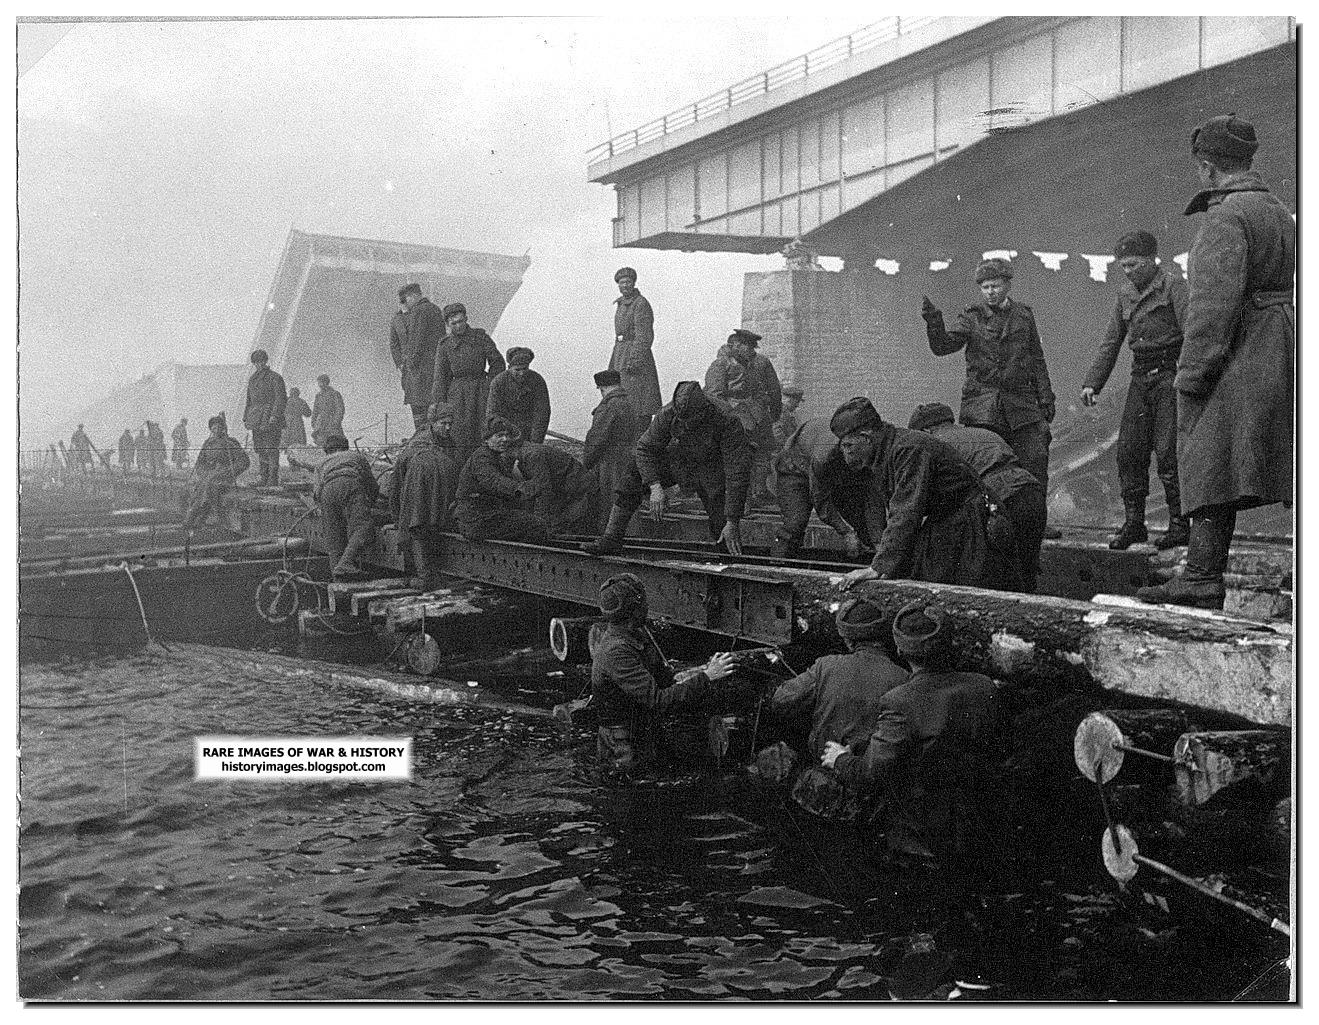 http://2.bp.blogspot.com/-u4XwM948txw/ToVsb96WtFI/AAAAAAAAGhk/53mUefTthKw/s1600/soviet-soldiers-builad-a-pontoon-bridge-across-oder-to-reach-berlin-1945.jpg